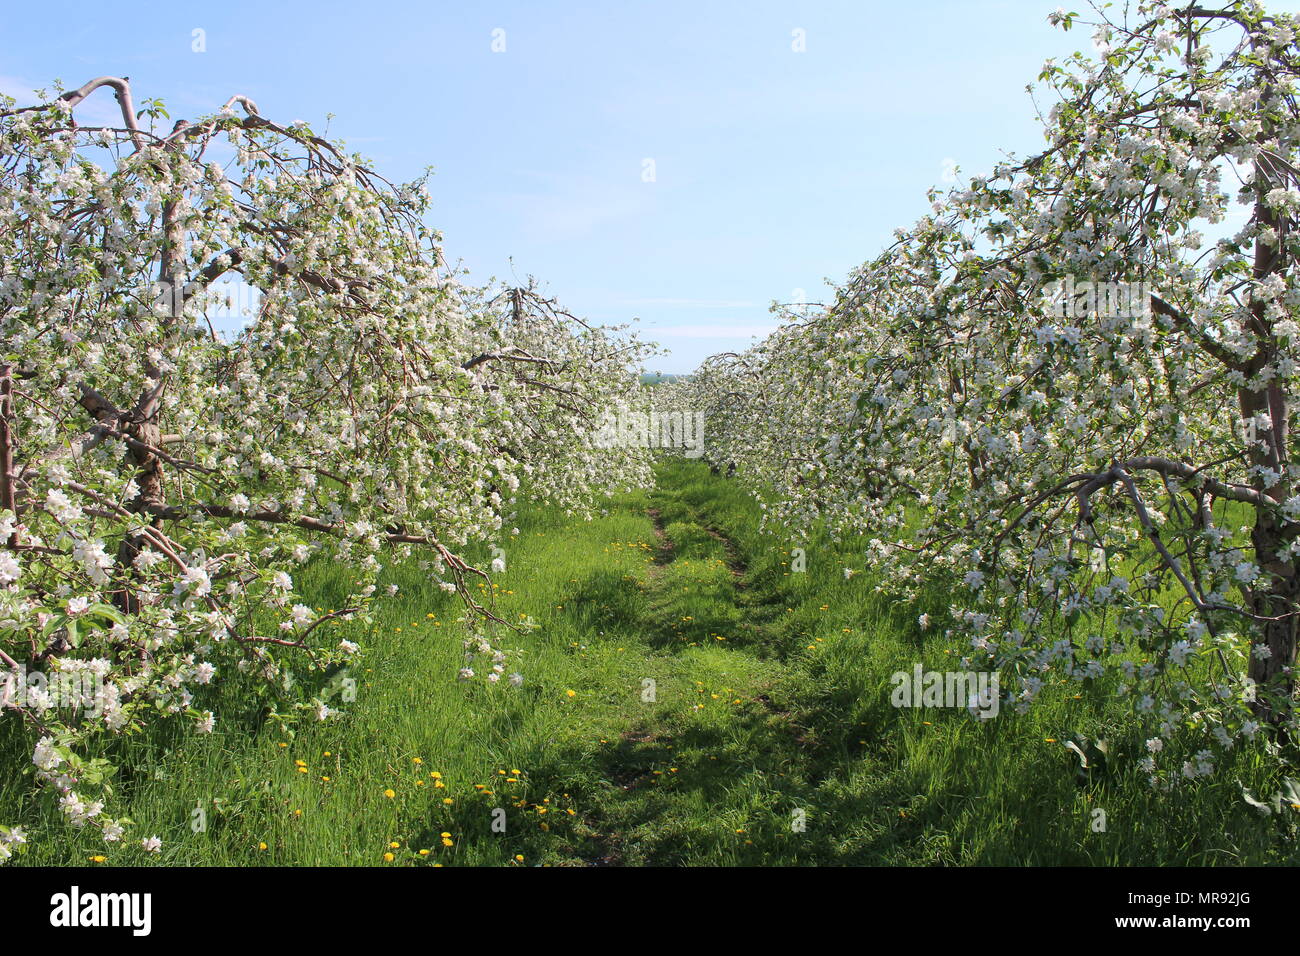 Apple trees in full bloom Stock Photo